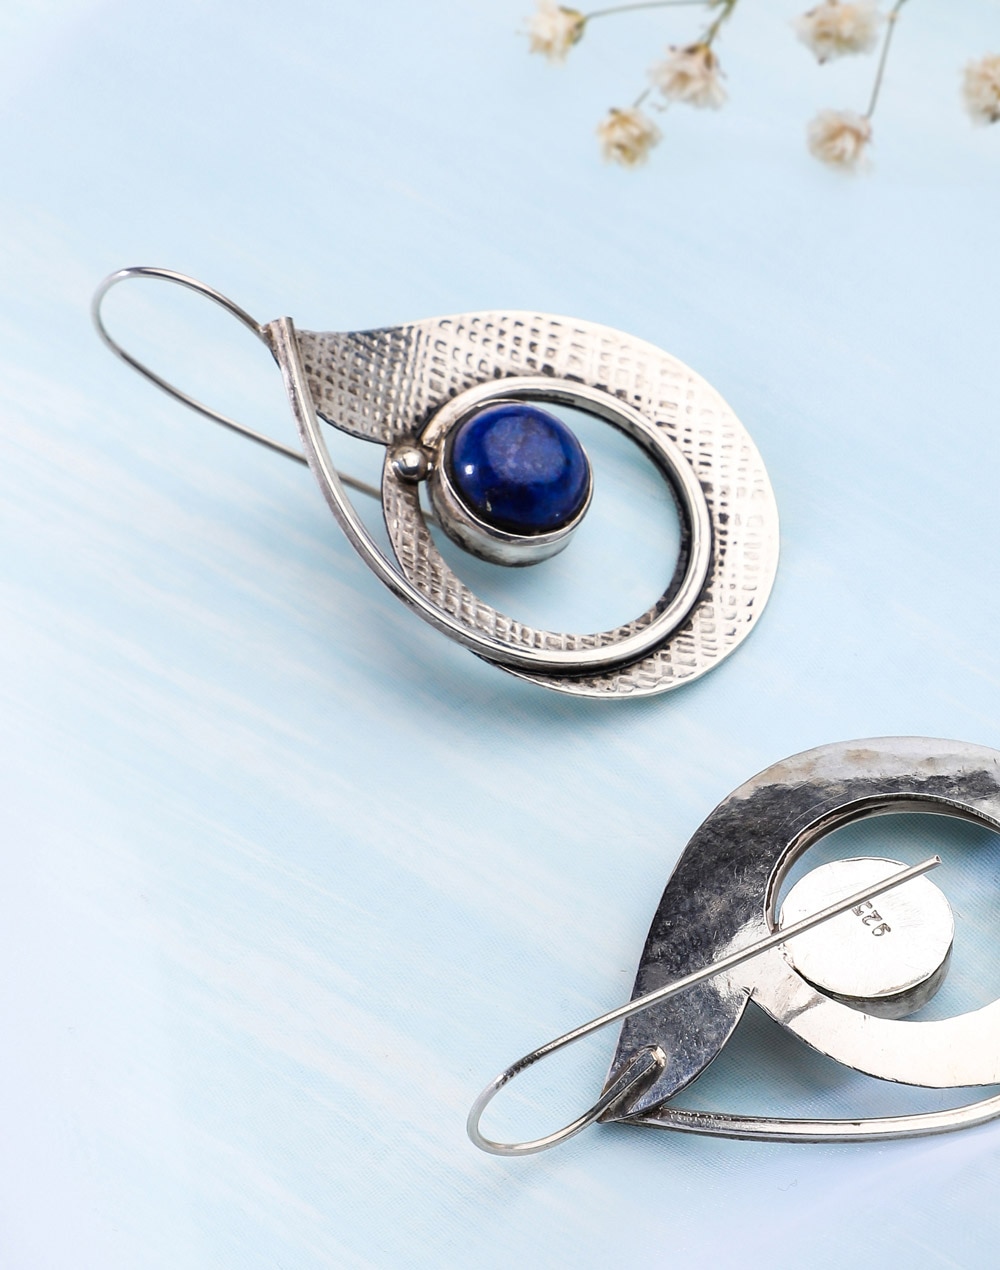 Silver Blue Dangler Earrings